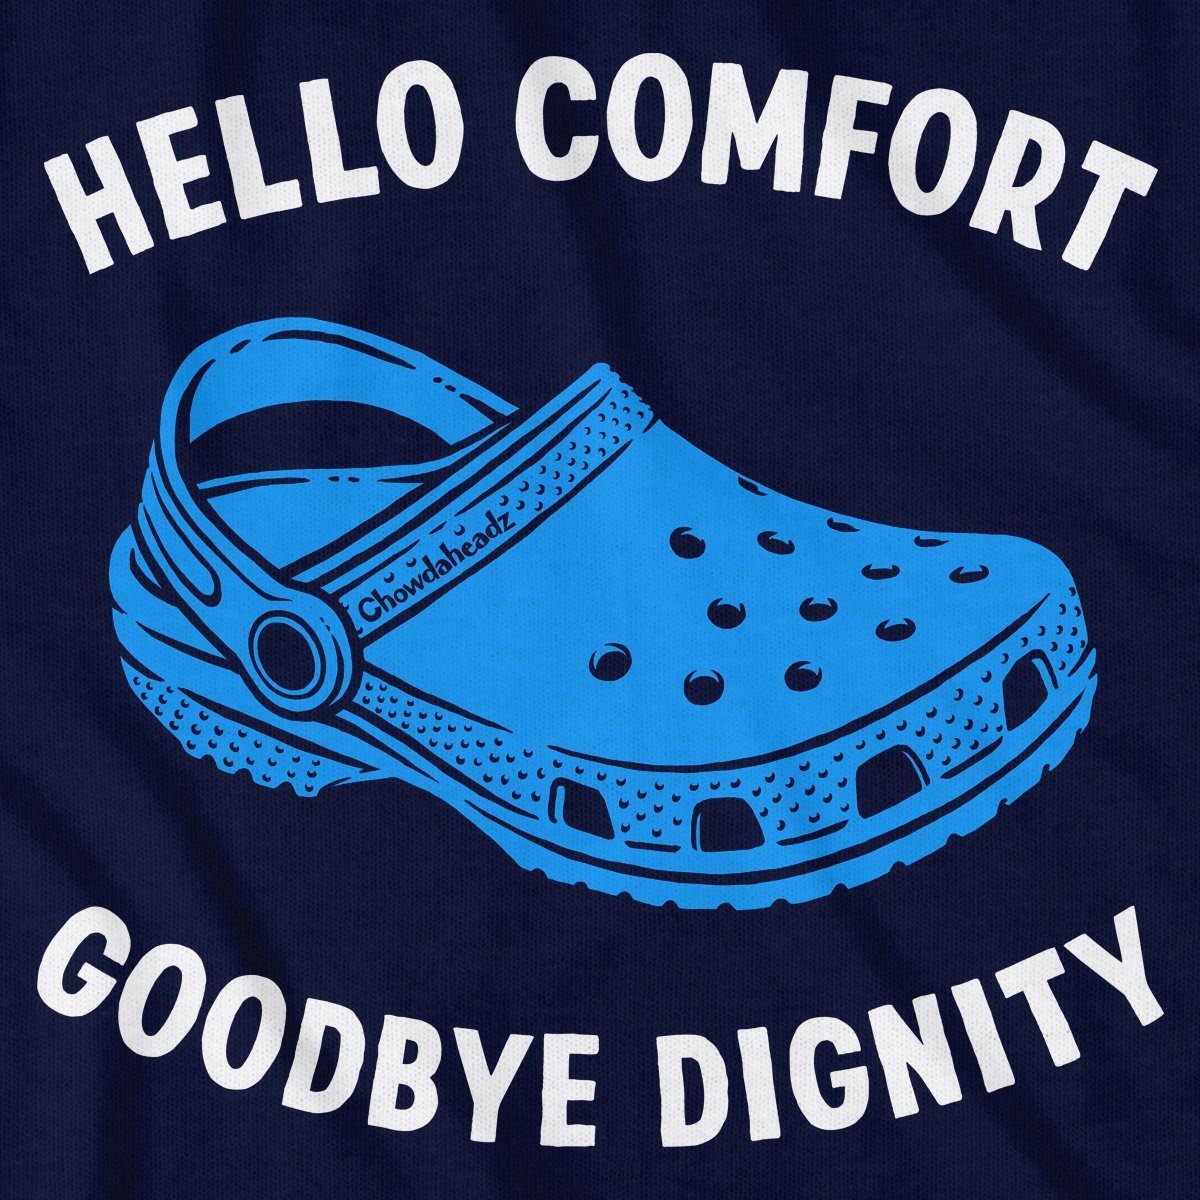 Hello Comfort Goodbye Dignity T-Shirt - Chowdaheadz